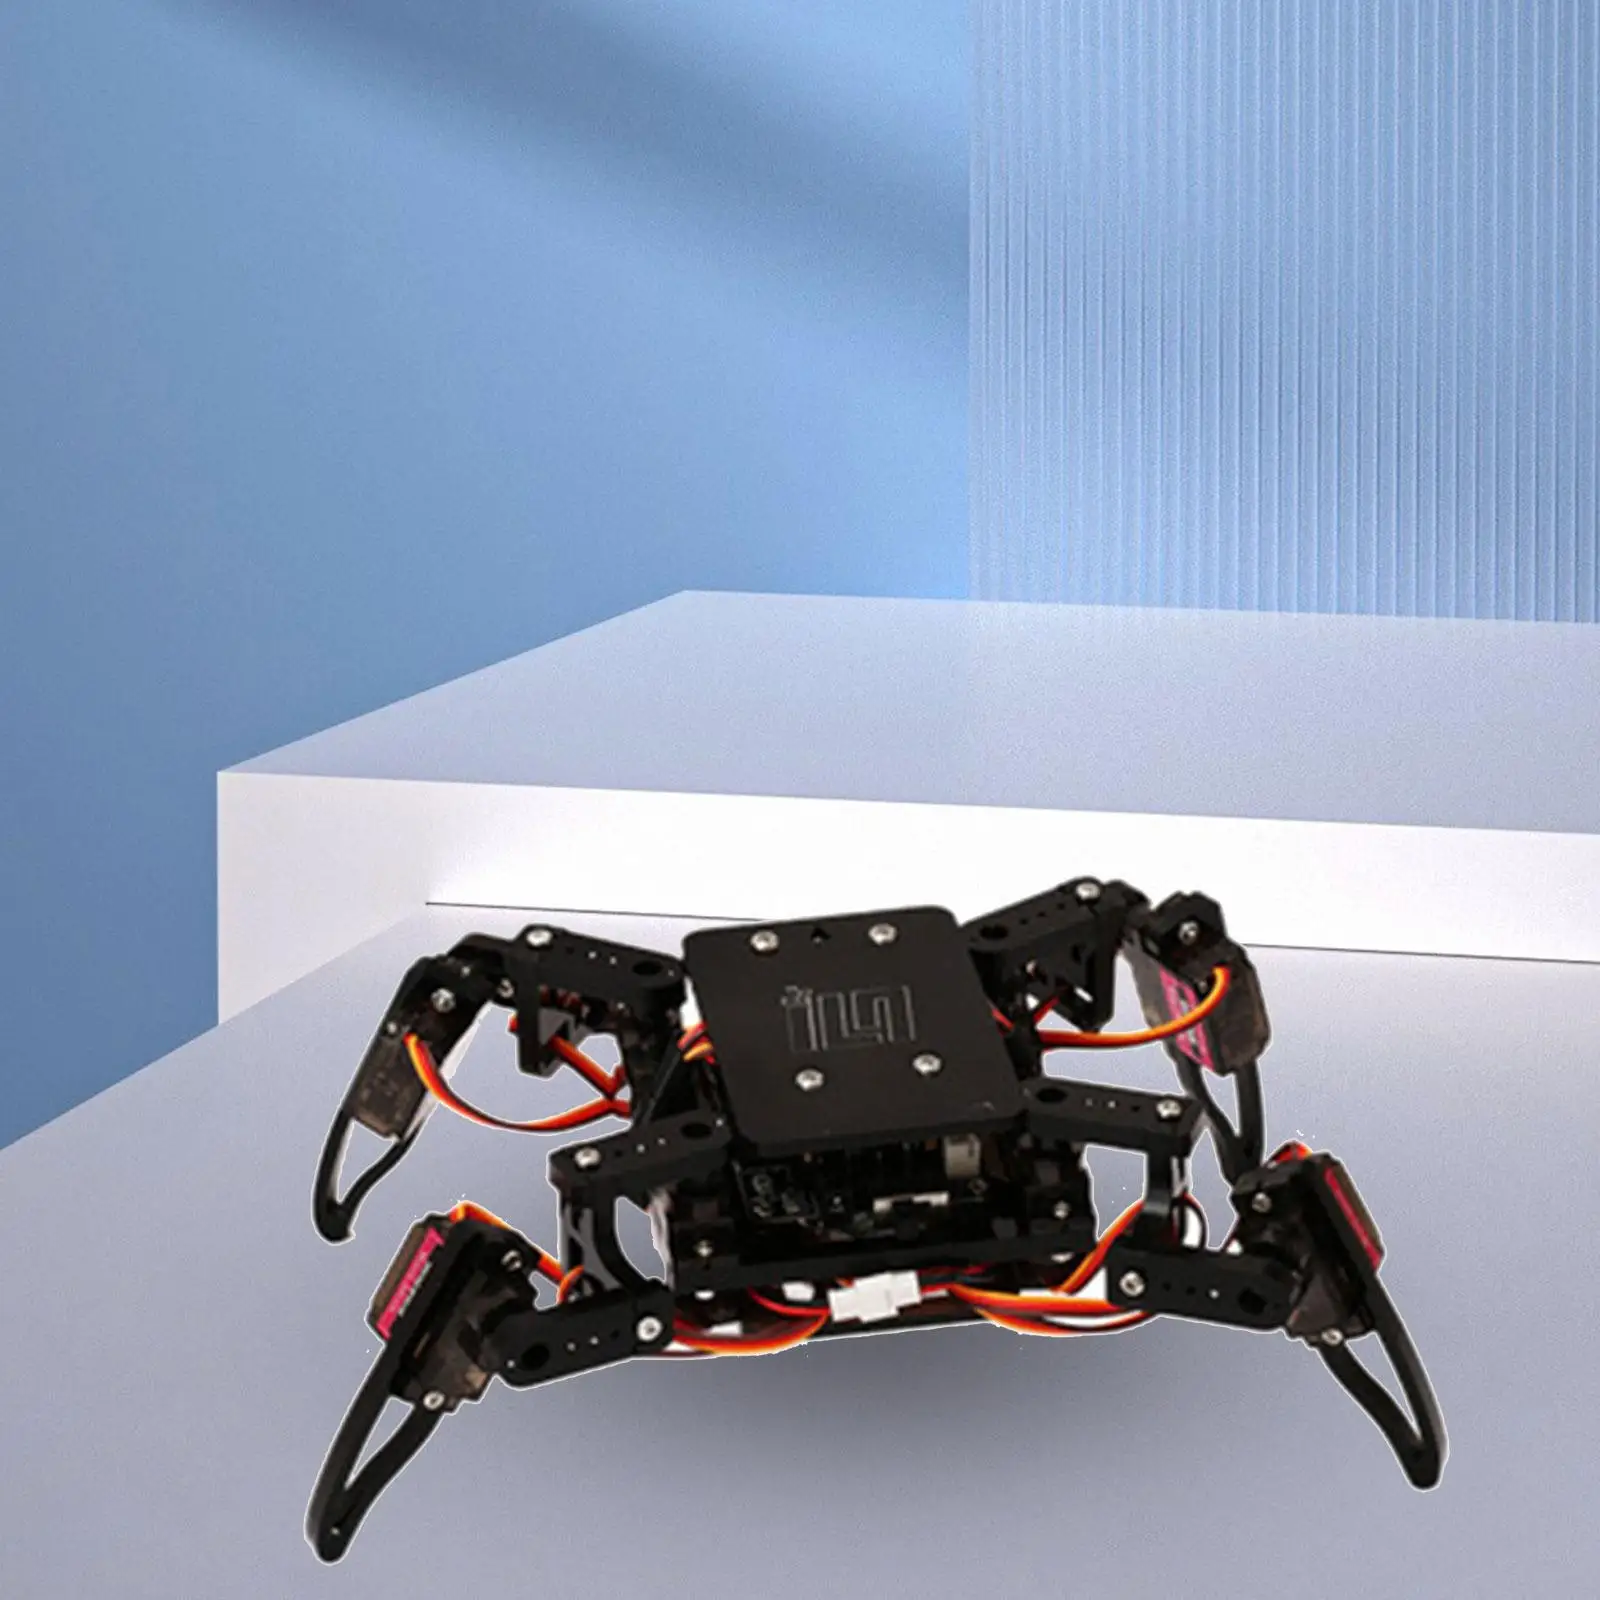 DIY Quadruped Robot Kits Stem Crawling Robot Set for Birthday Gifts Adults